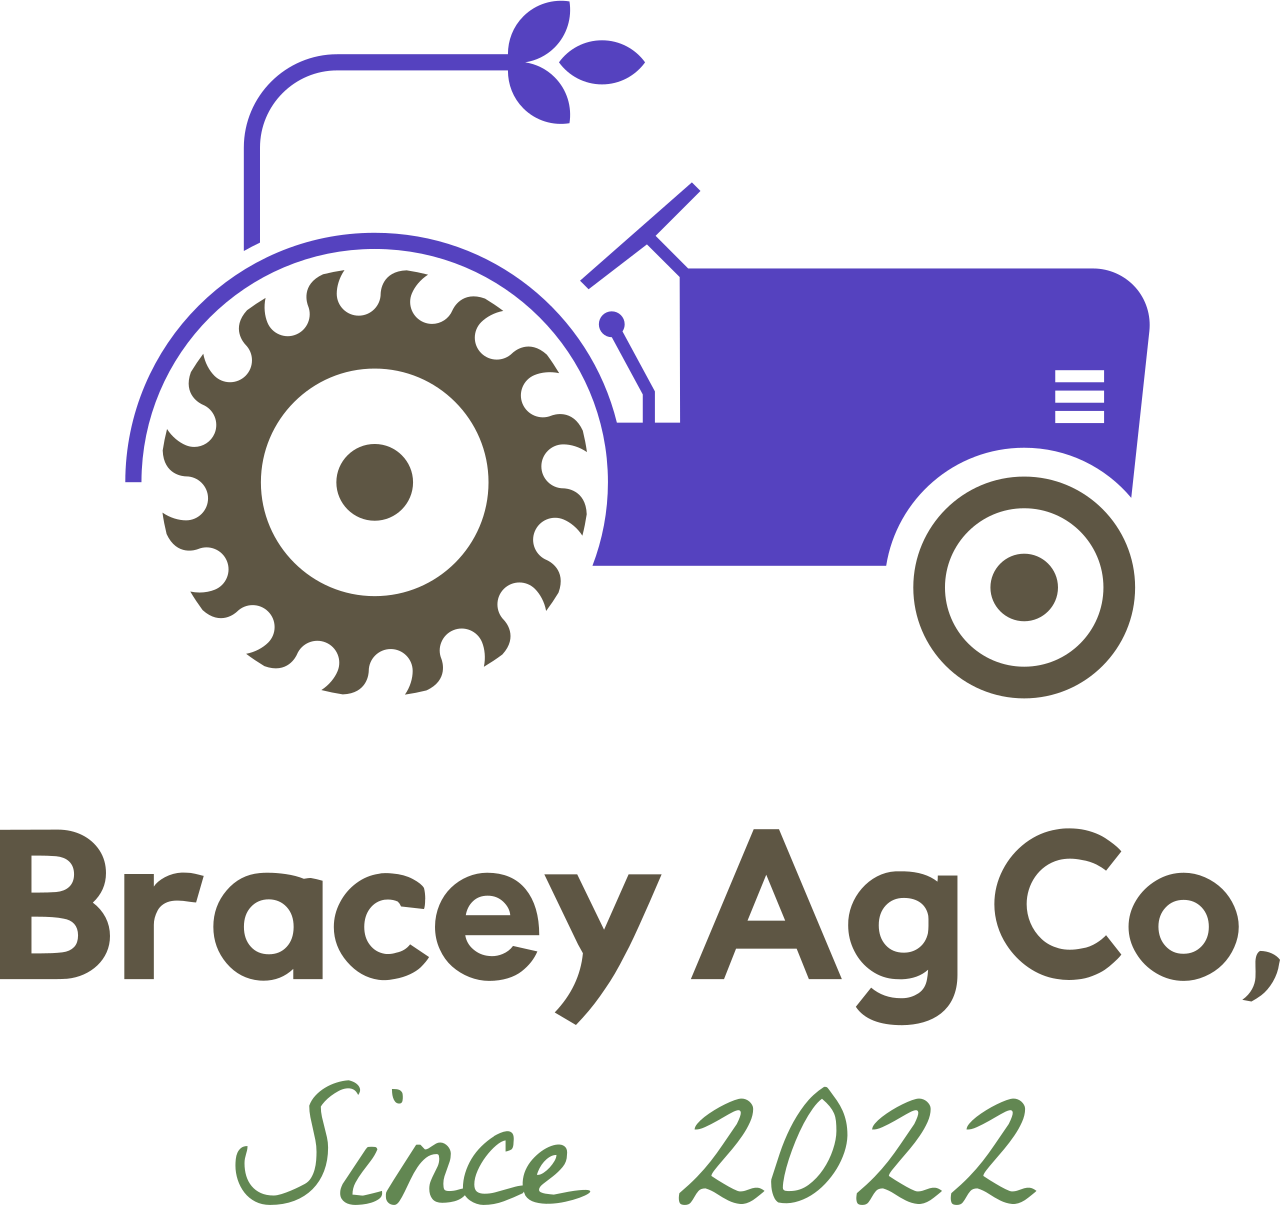 Bracey Ag Co.'s web page